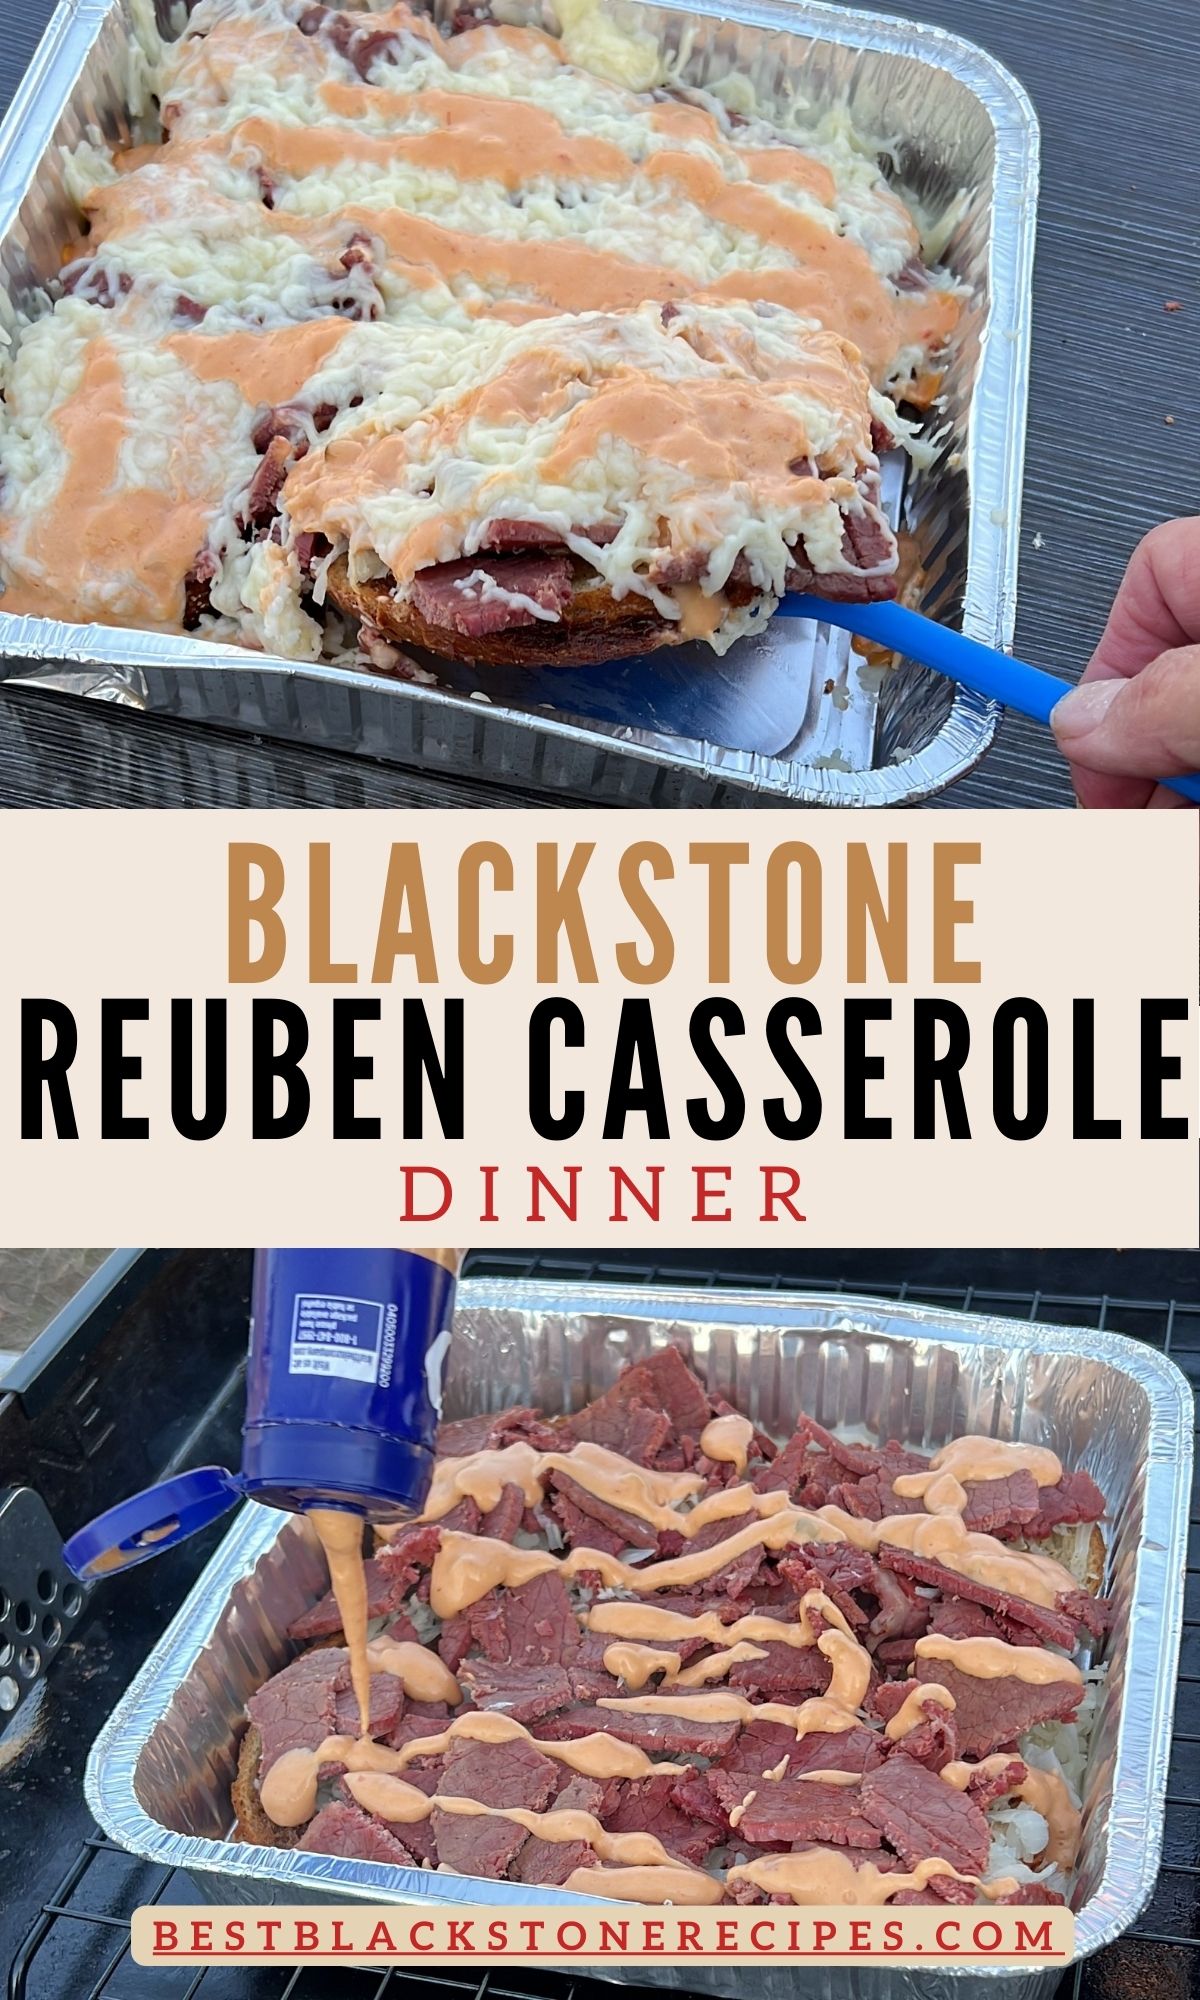 Blackstone reuben casserole dinner.